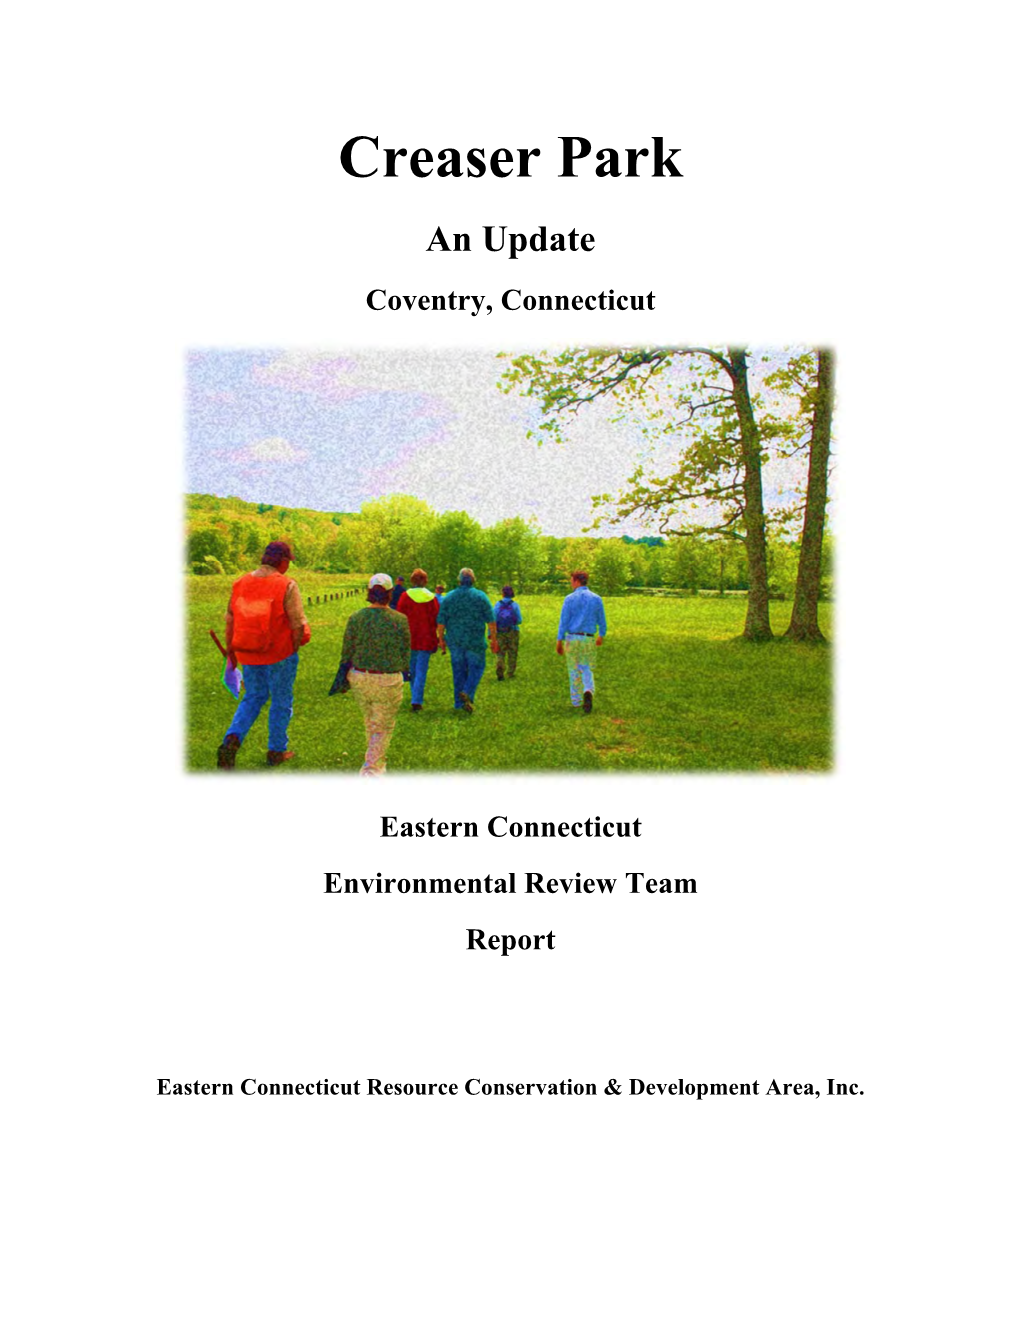 Creaser Park Environmental Review